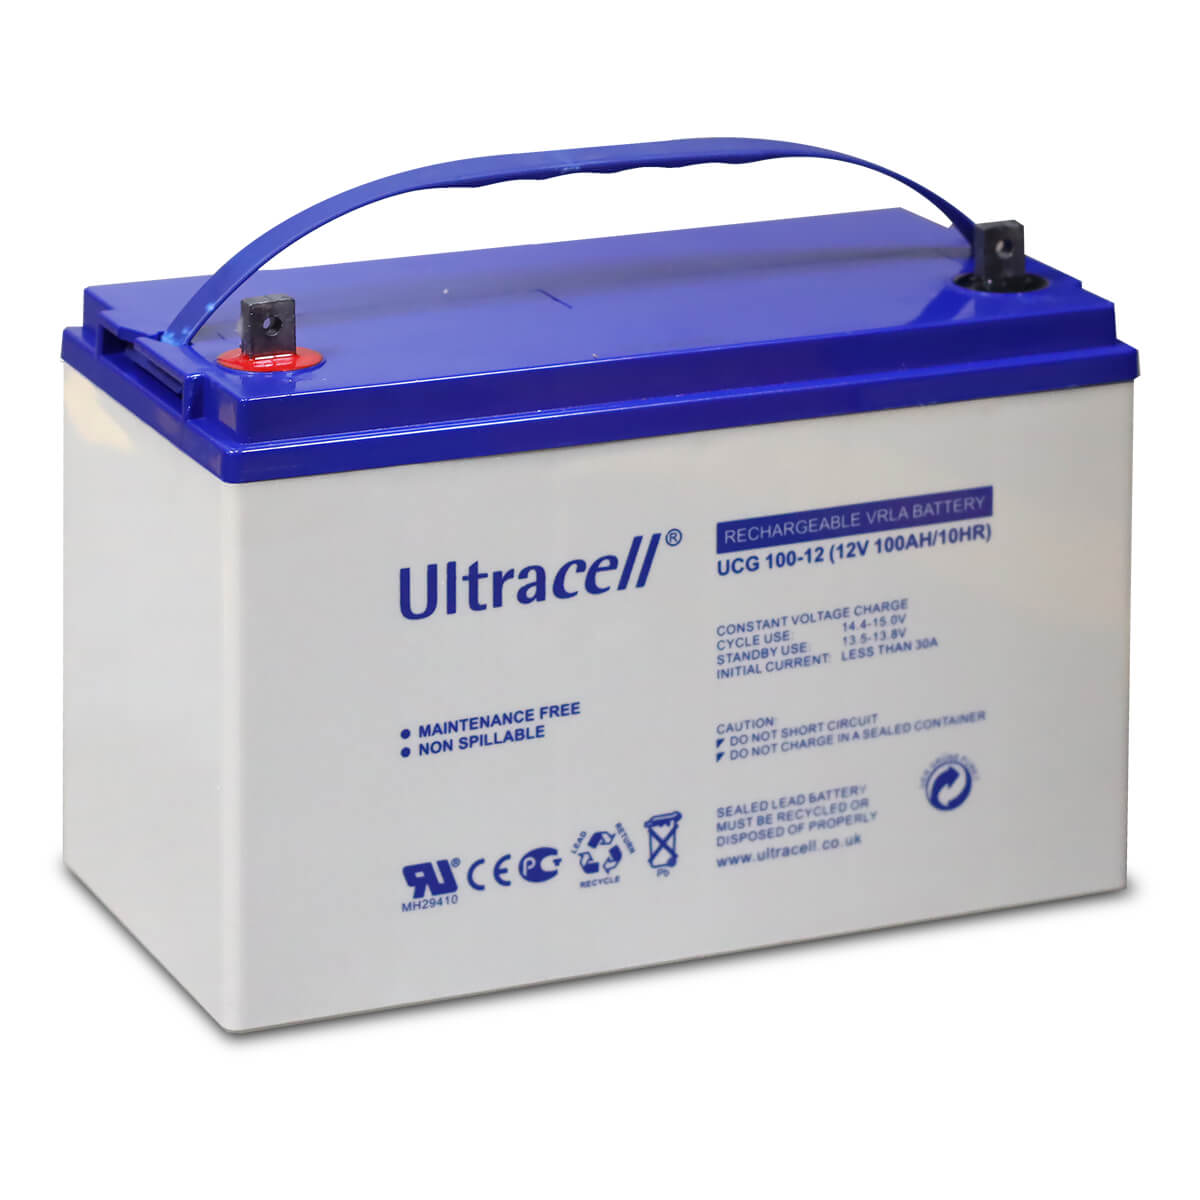 UCG Ultracell UCG100-12, 12V, Linhai ATV Electric